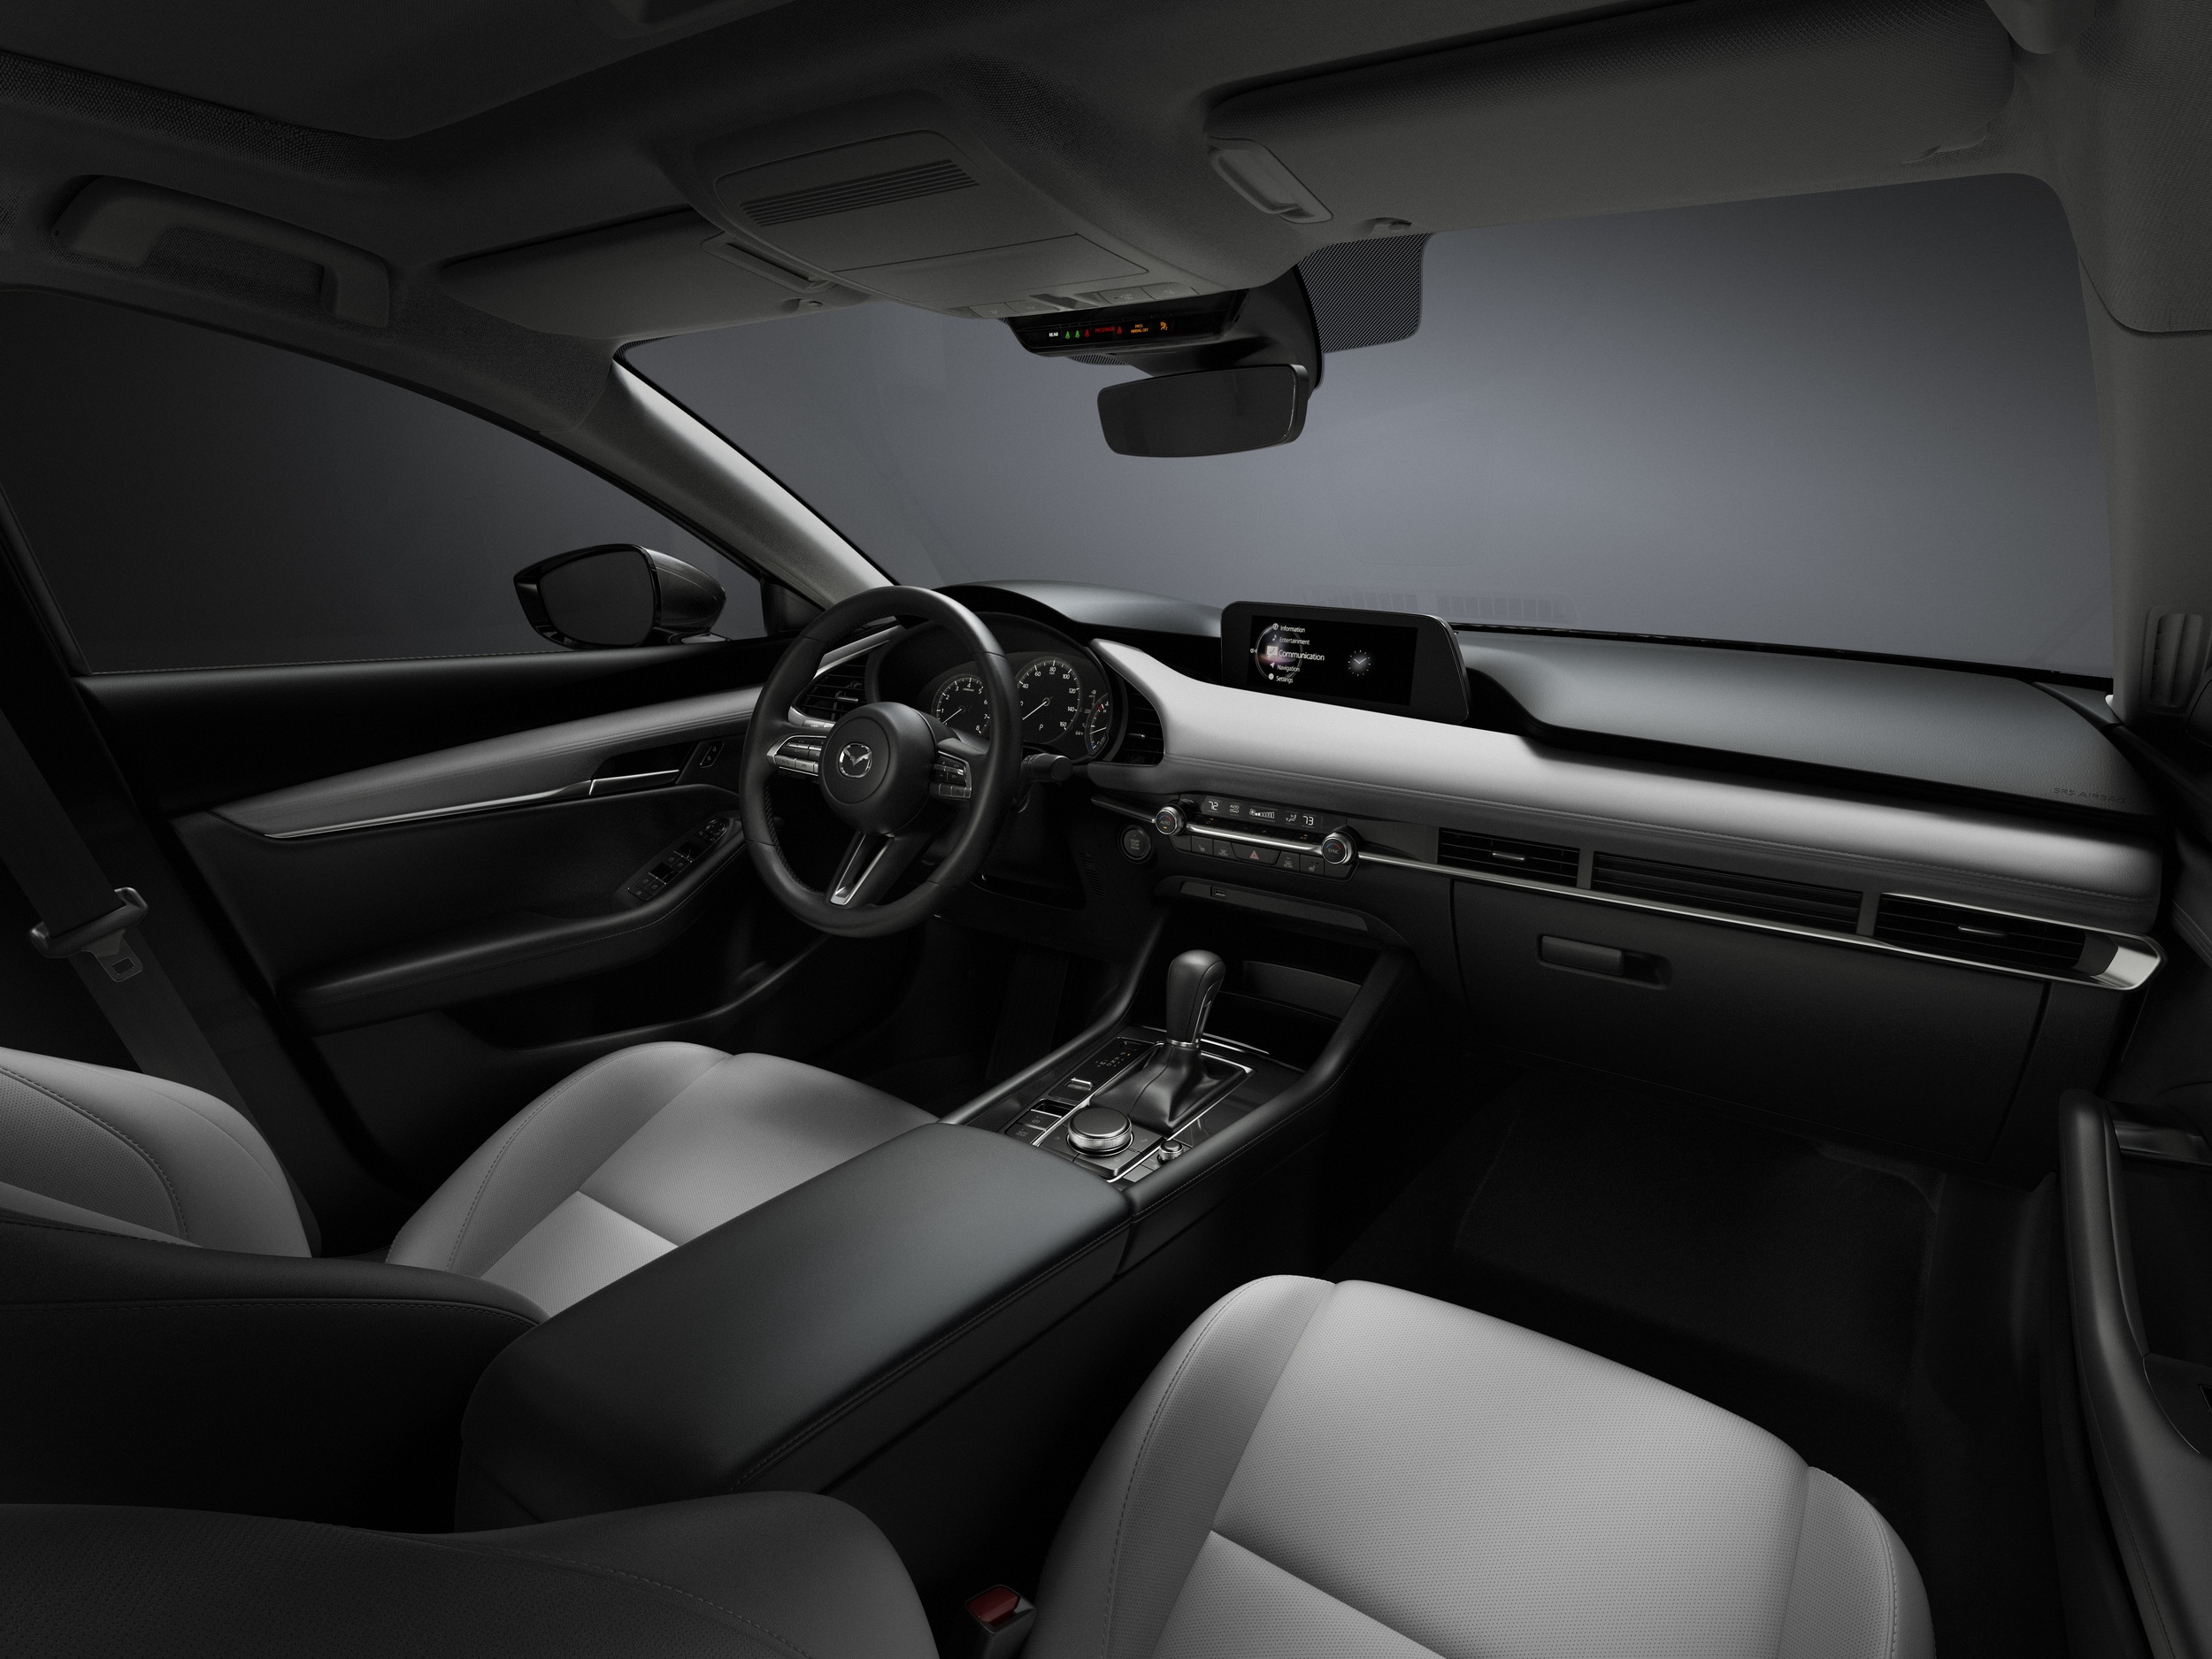 Mazda3, 2019 - Interior